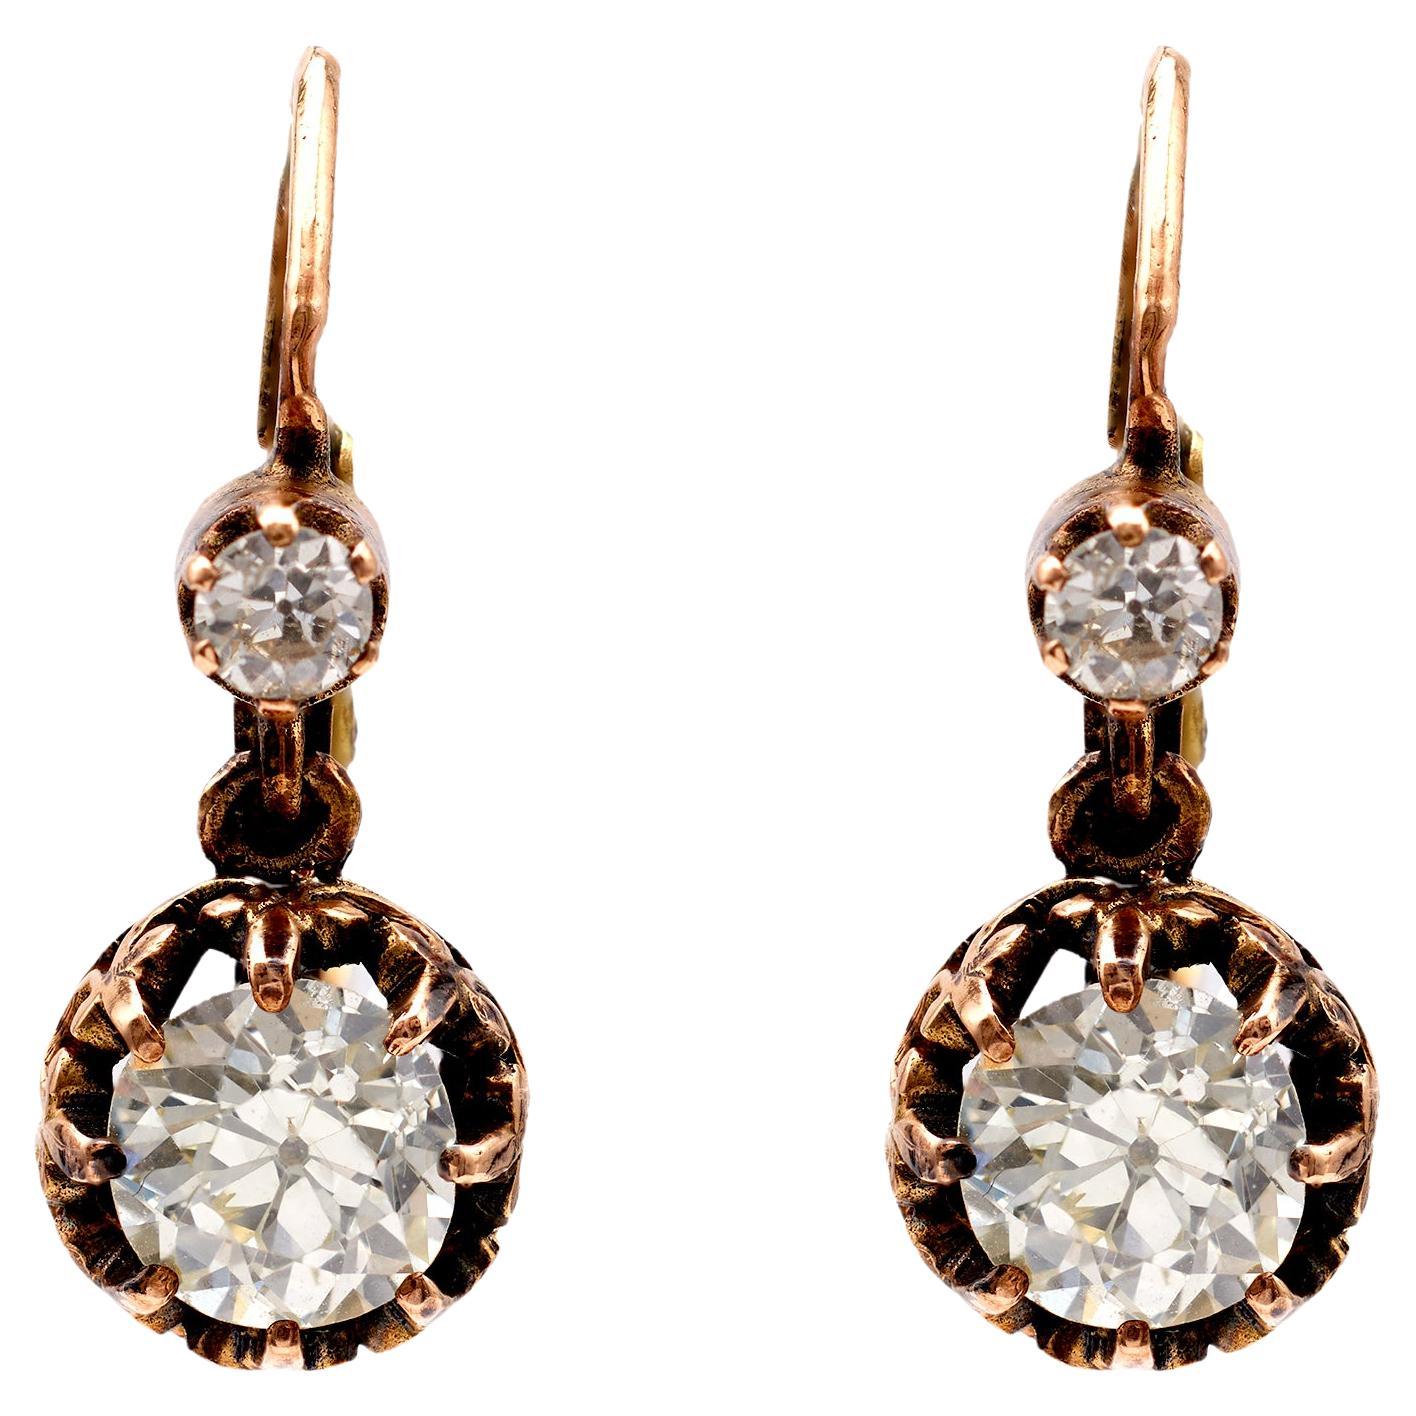 Antique Inspired 1.93 Carat Diamond 18k Gold Drop Earrings